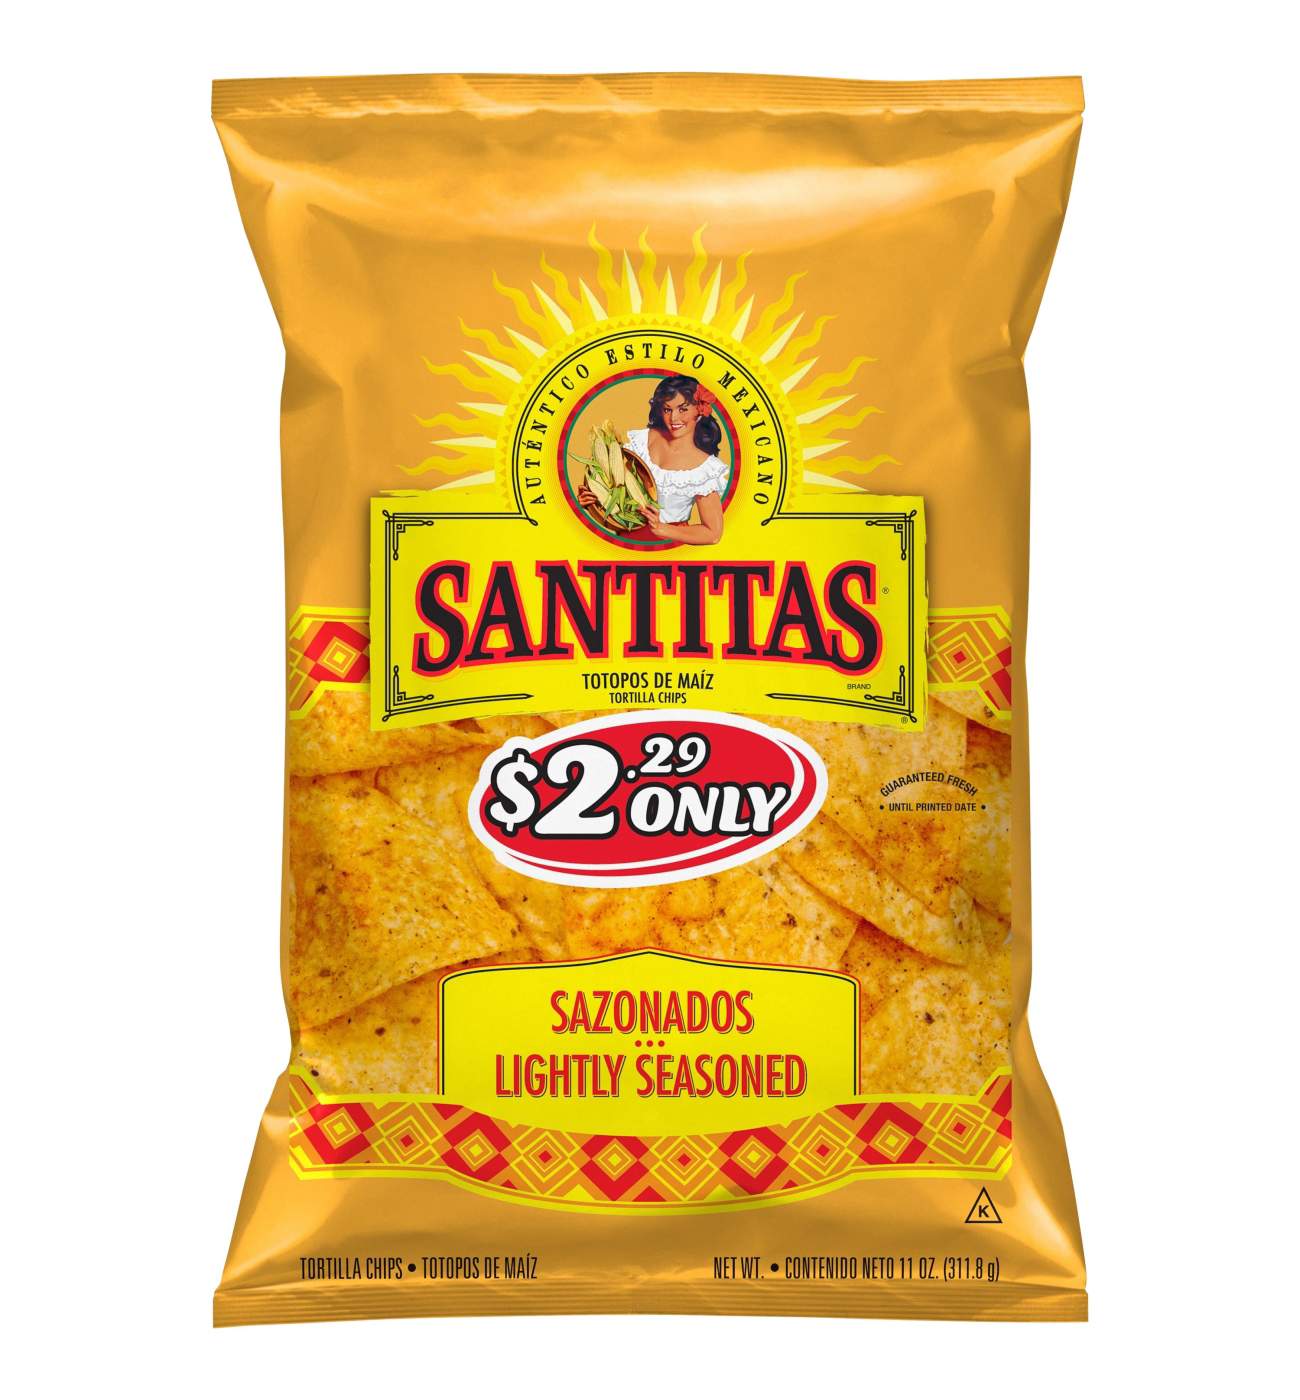 Santitas Sazonados Lightly Seasoned Tortilla Chips; image 1 of 2